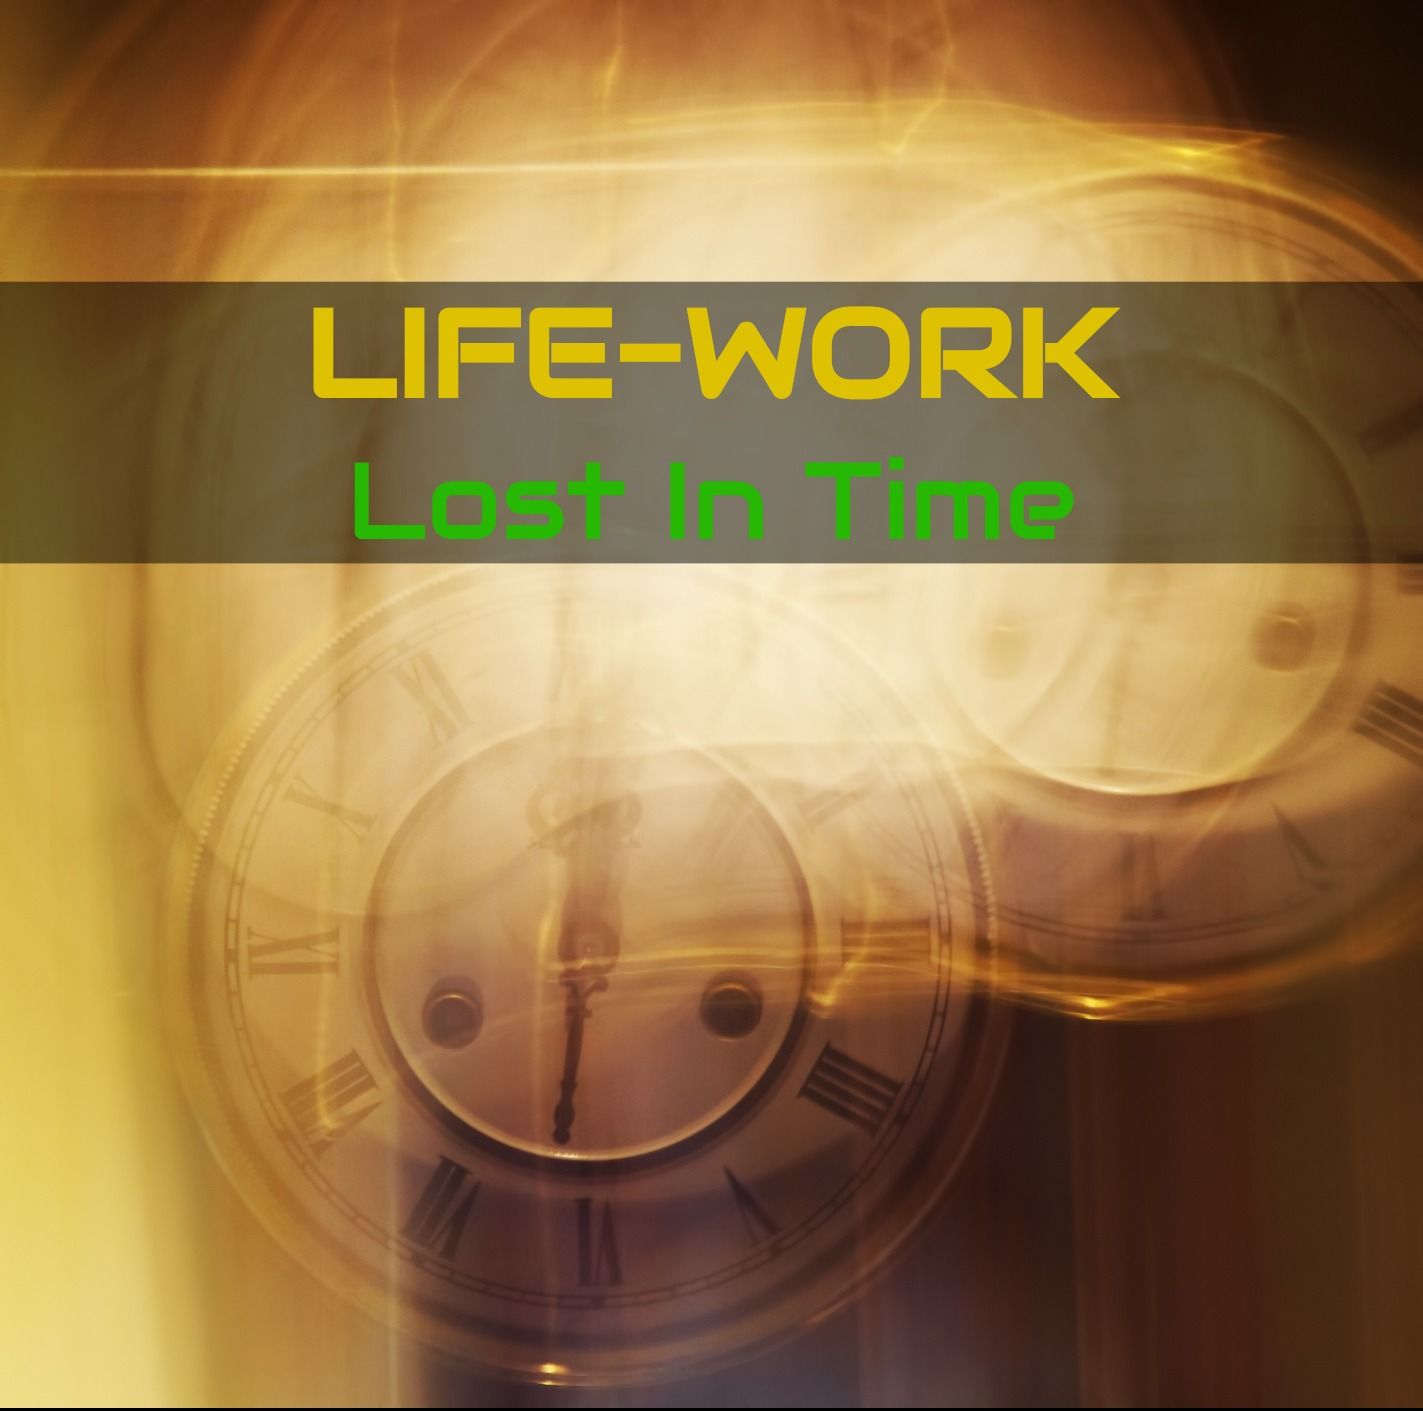 Life-work